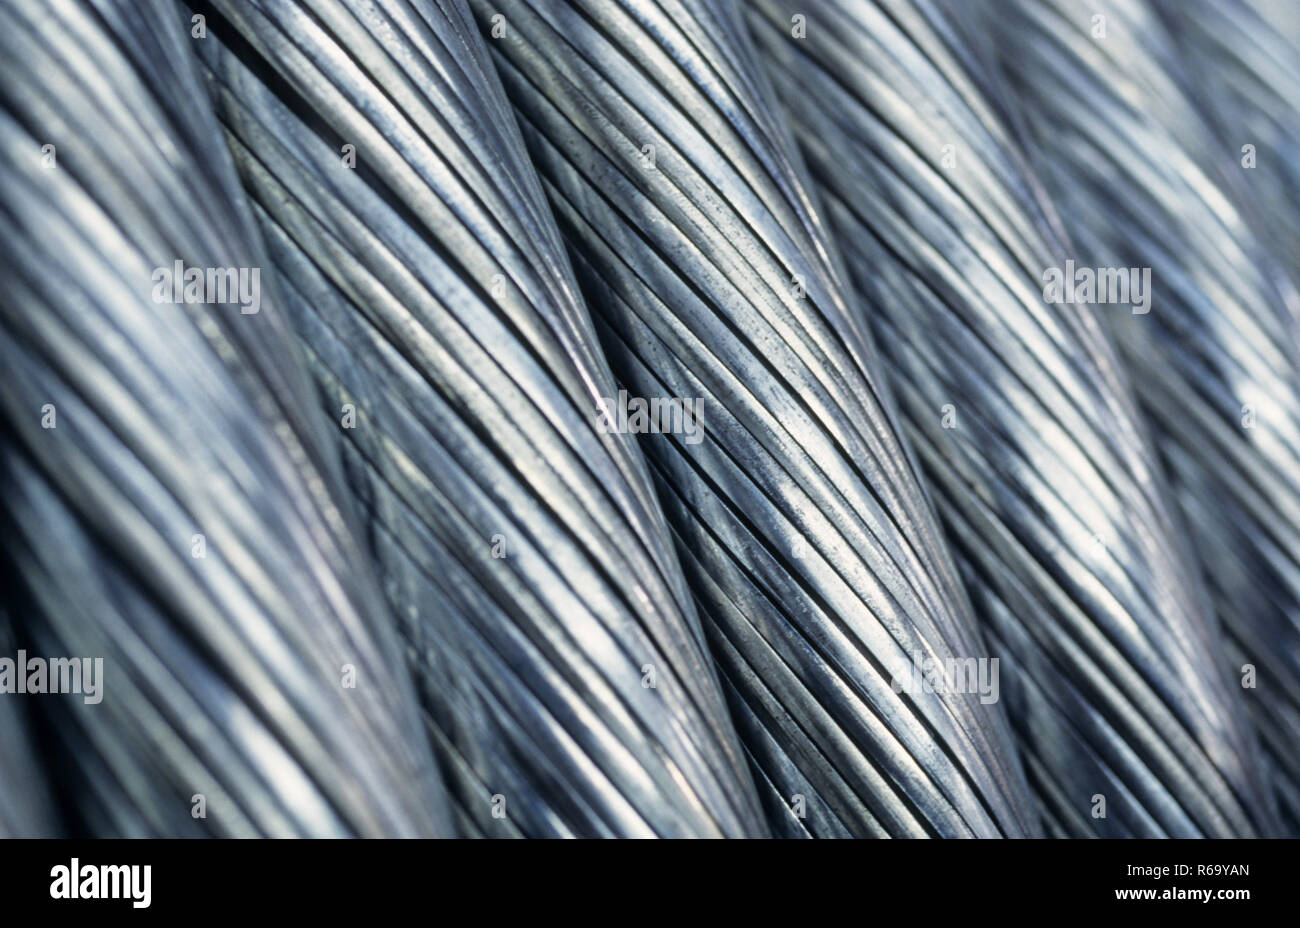 Aluminum Cable, India, Asia Stock Photo